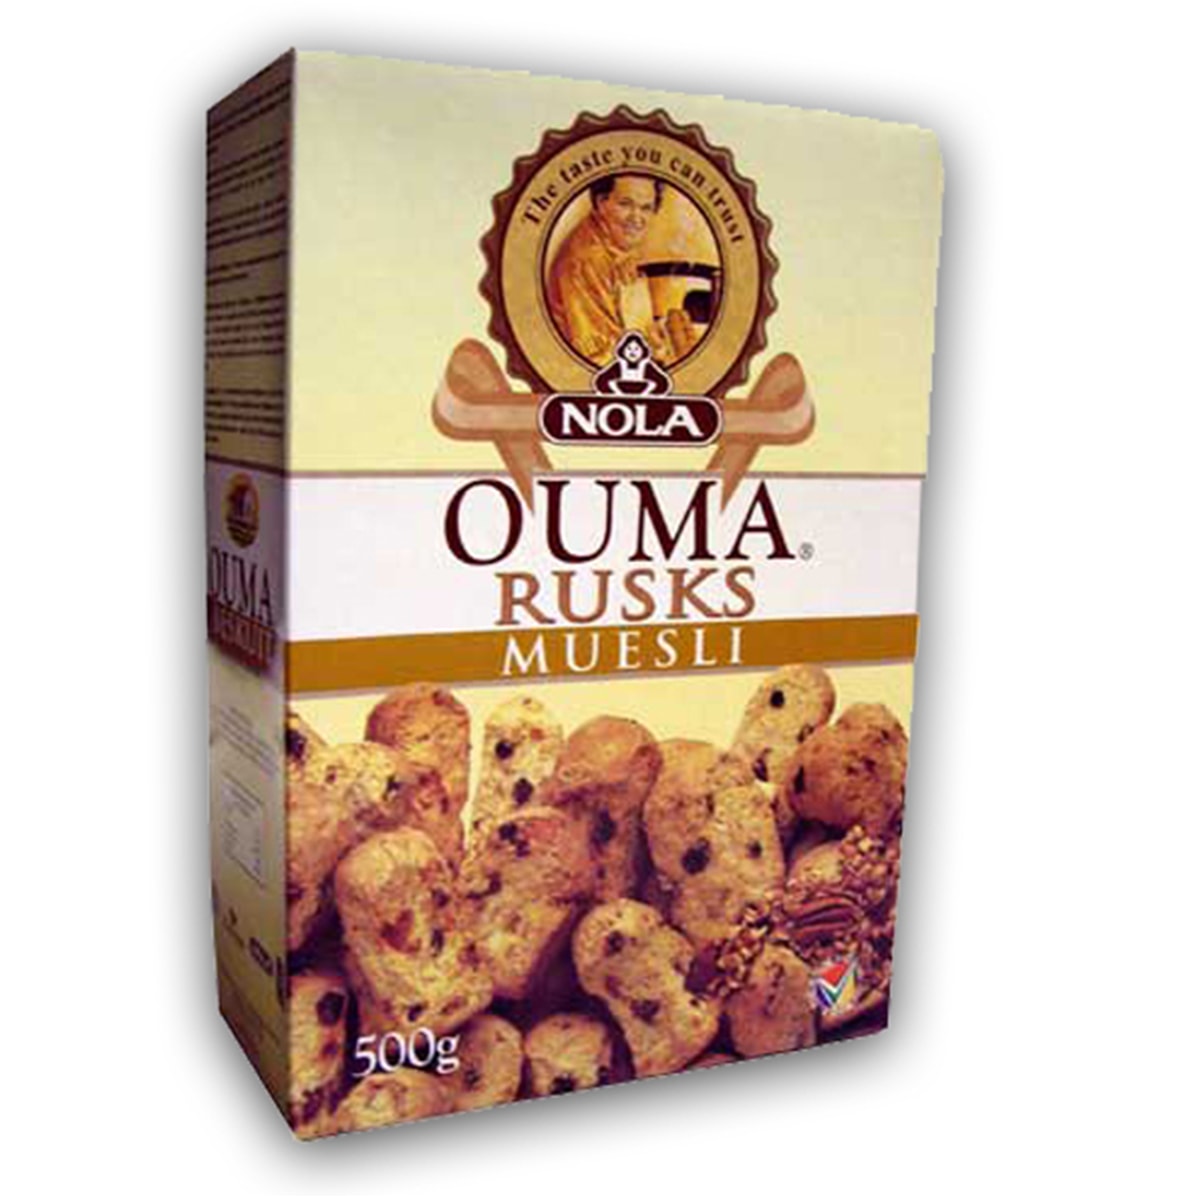 Buy Ouma Muesli Rusks - 500 gm